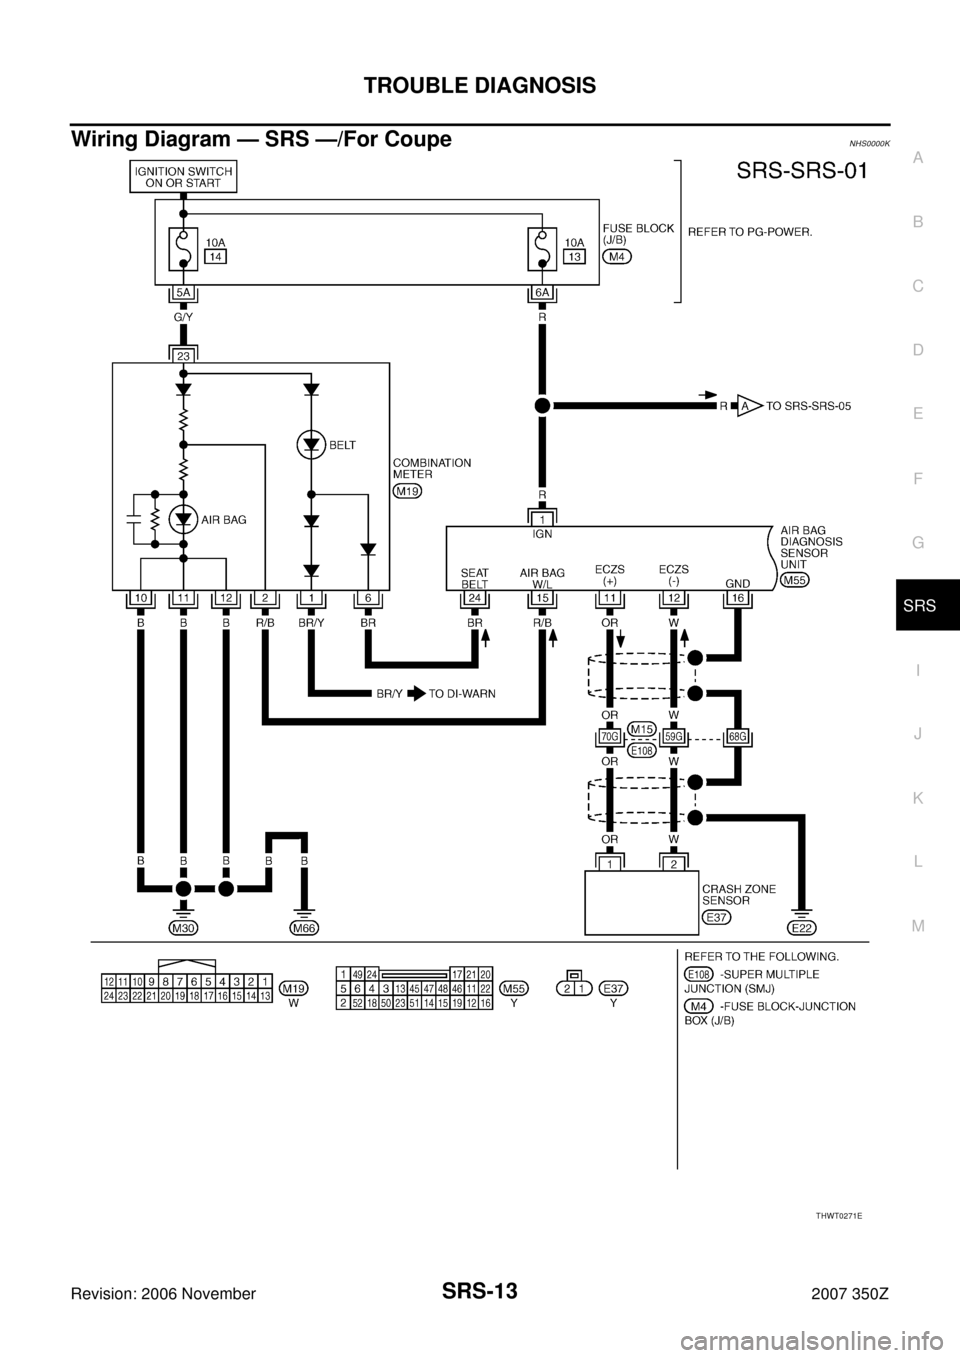 NISSAN 350Z 2007 Z33 Supplemental Restraint System User Guide TROUBLE DIAGNOSIS
SRS-13
C
D
E
F
G
I
J
K
L
MA
B
SRS
Revision: 2006 November2007 350Z
Wiring Diagram — SRS —/For CoupeNHS0000K
THWT0271E 